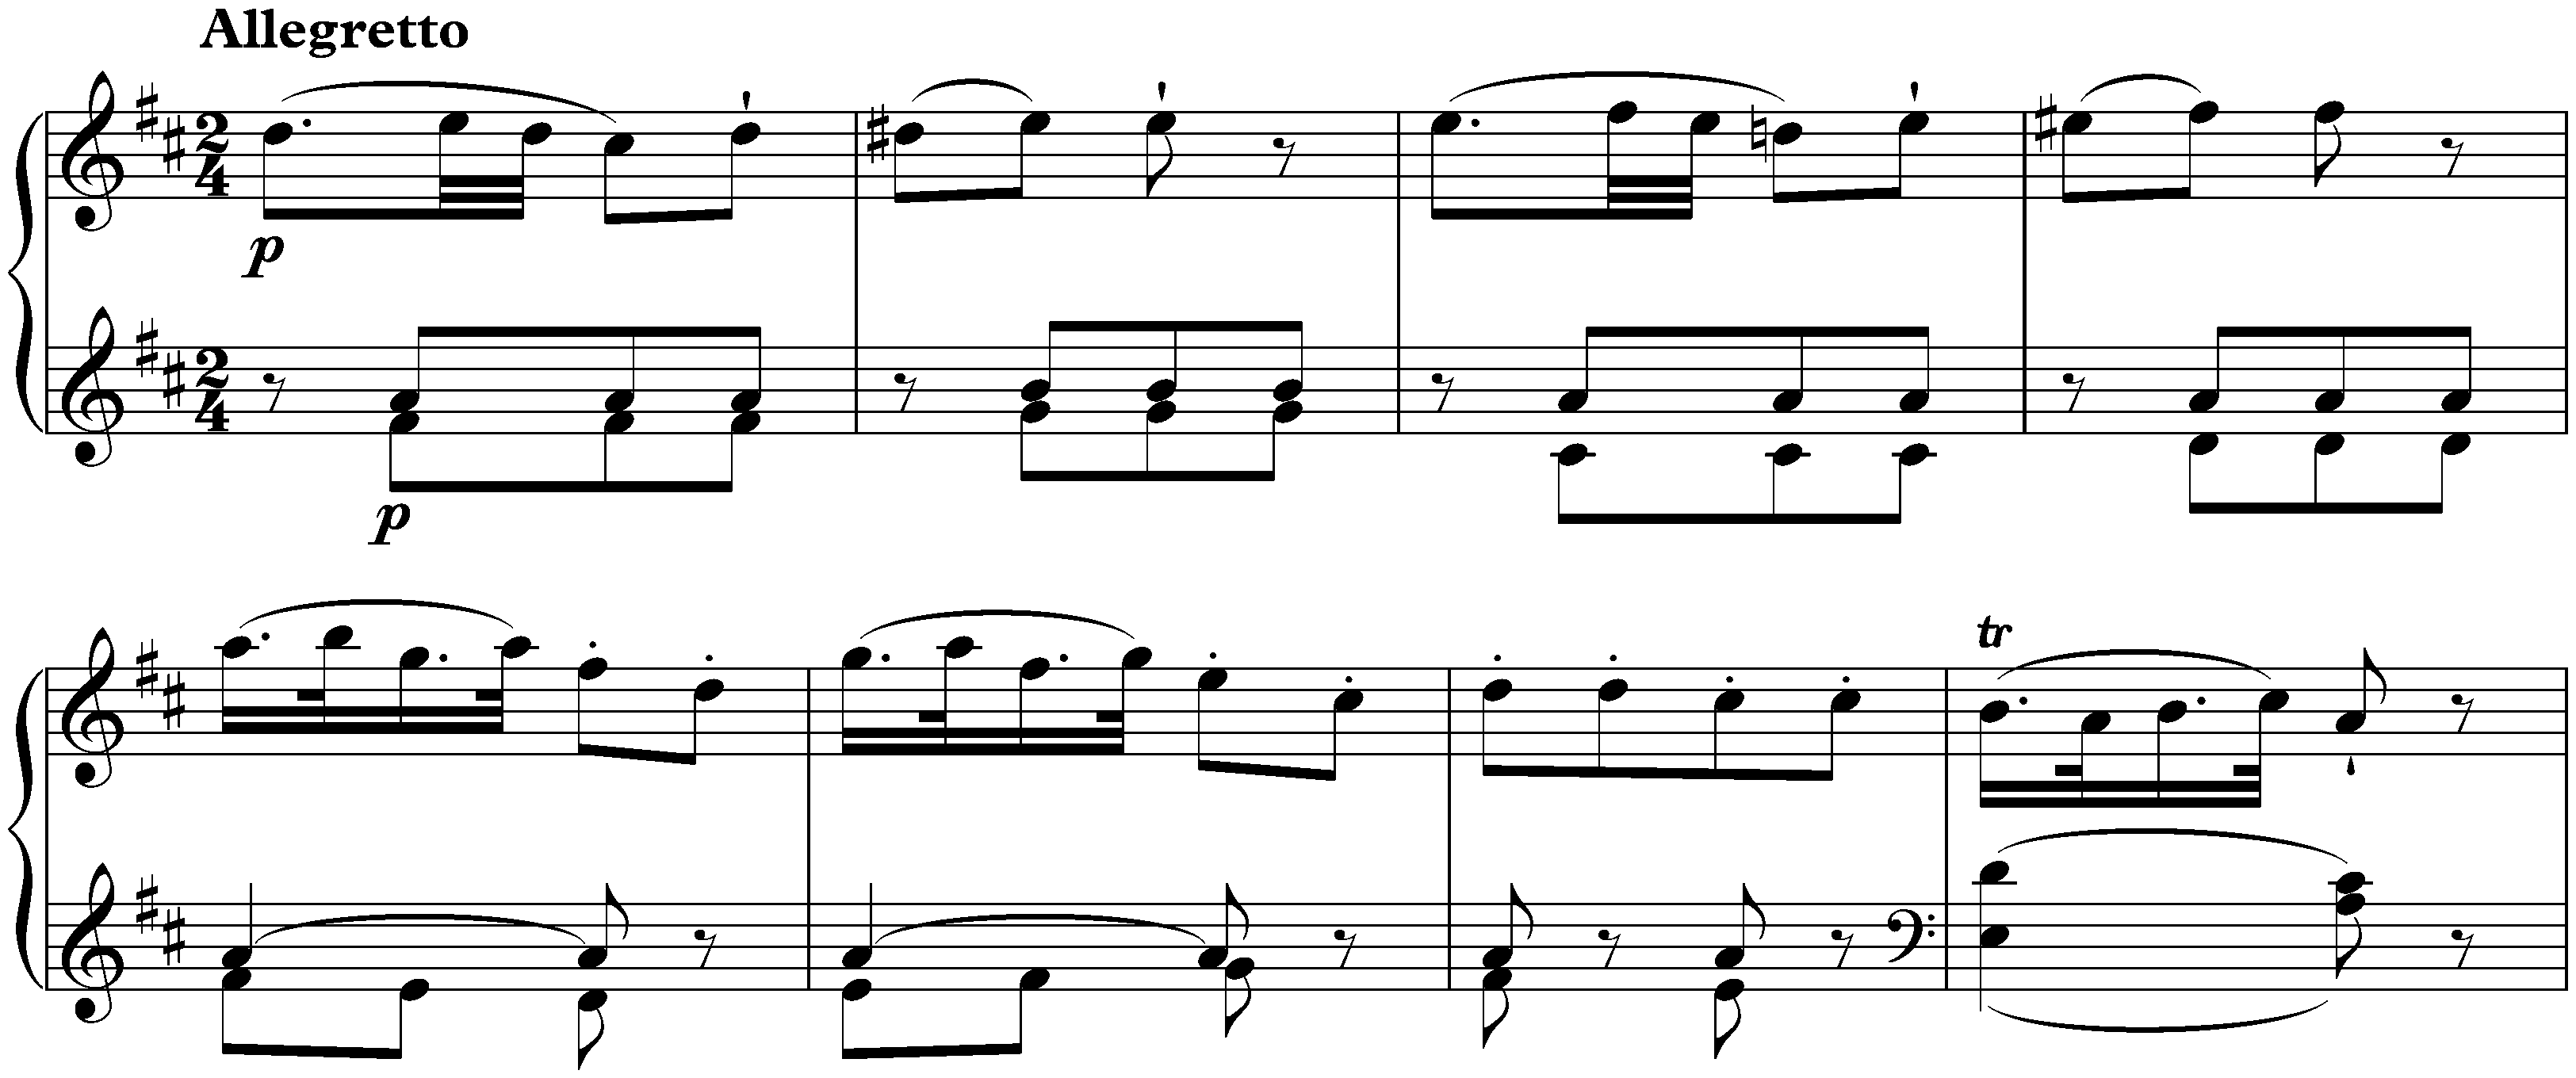 Sonata in D major, KV 576; 3. Allegretto